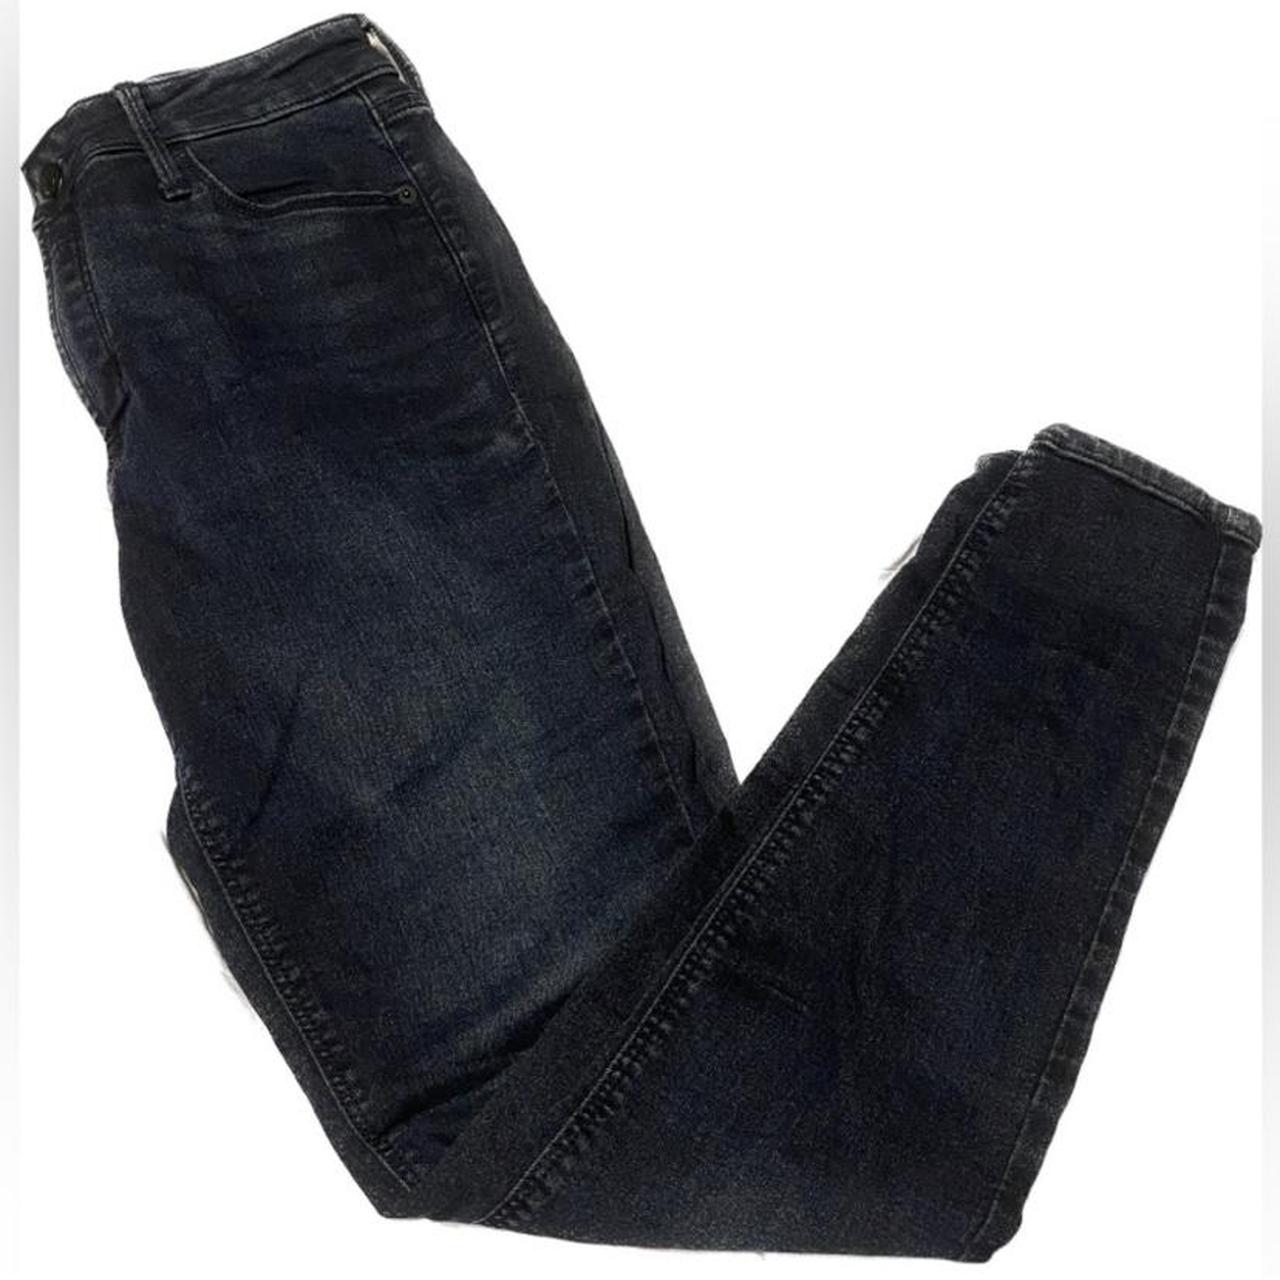 old navy black rockstar skinny jeans - Depop